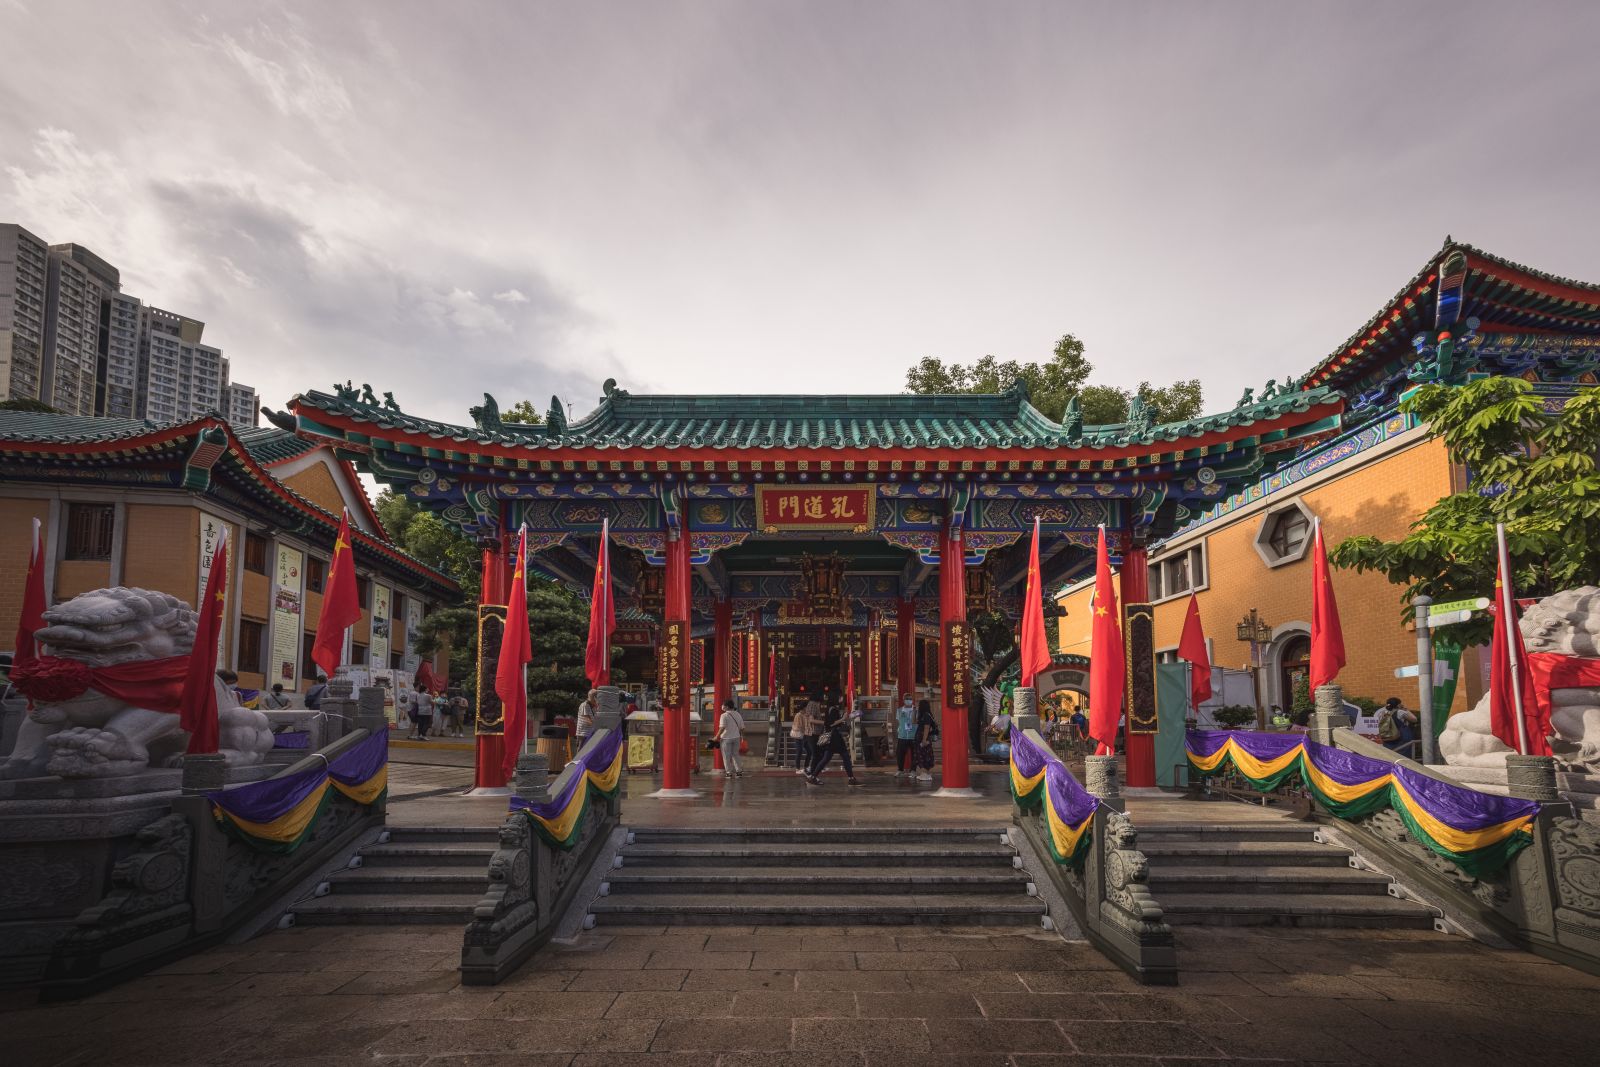 The majestic Temple of Confucius